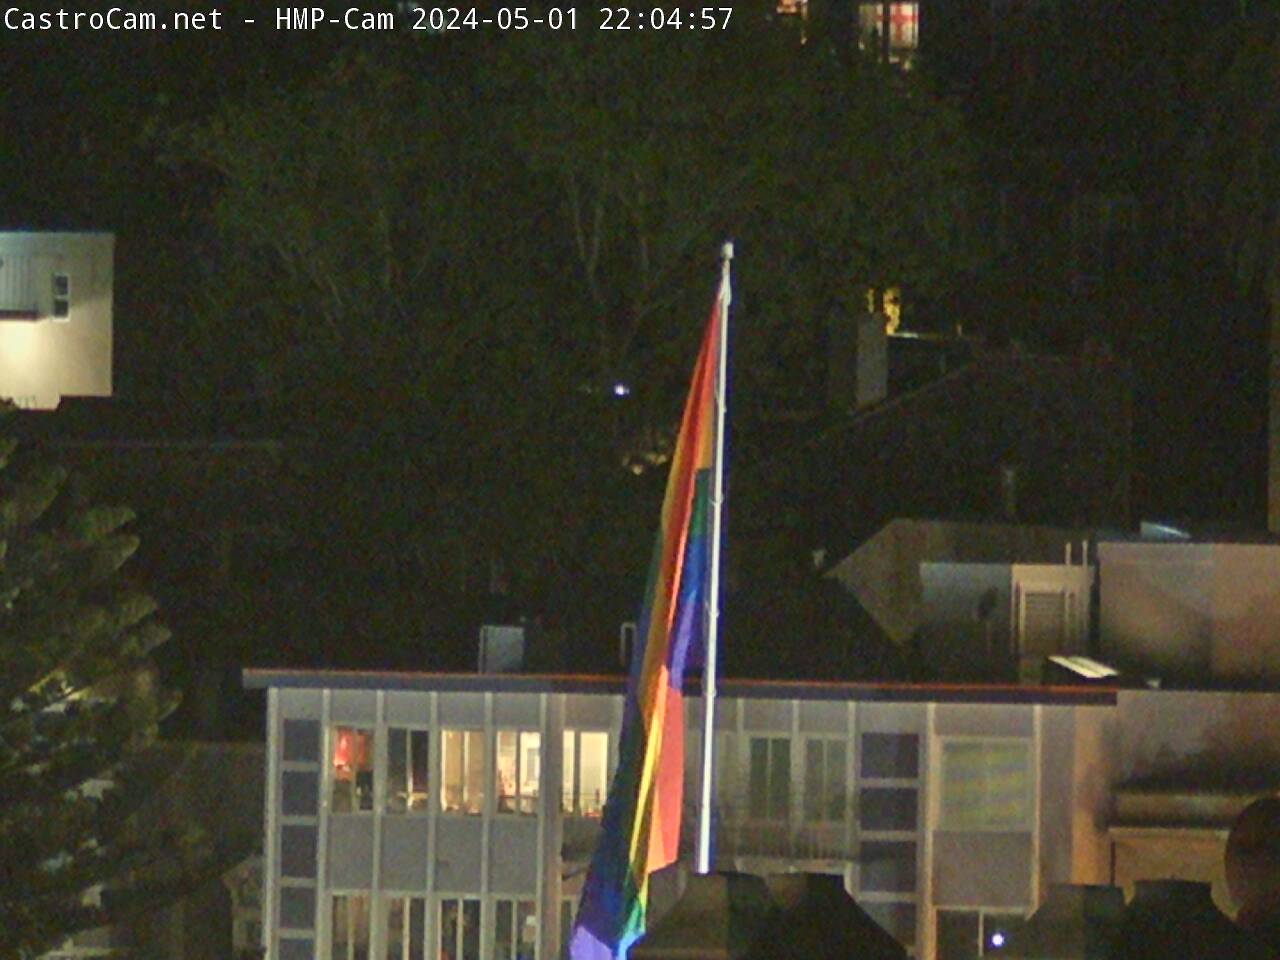 Gay Pride Flag at Harvey Milk Plaza